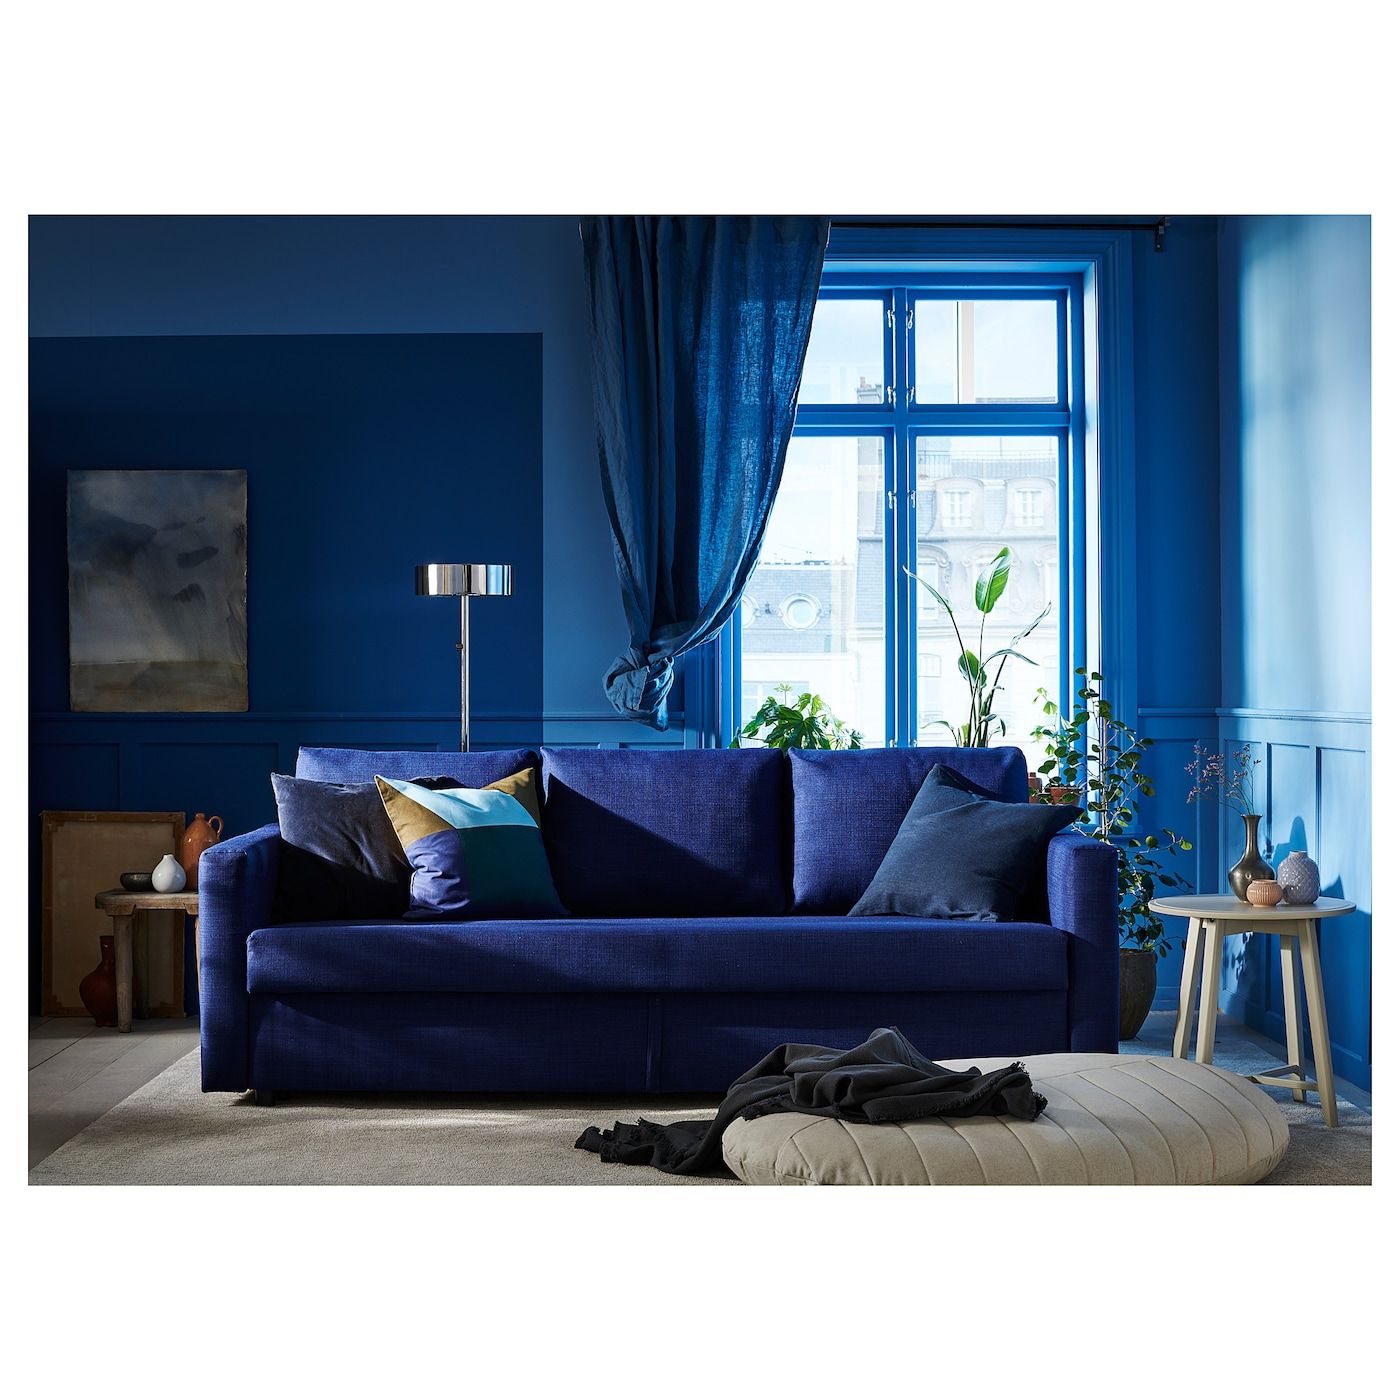 Friheten Sleeper Sofa, Skiftebo Blue – Ikea In Navy Sleeper Sofa Couches (View 10 of 15)